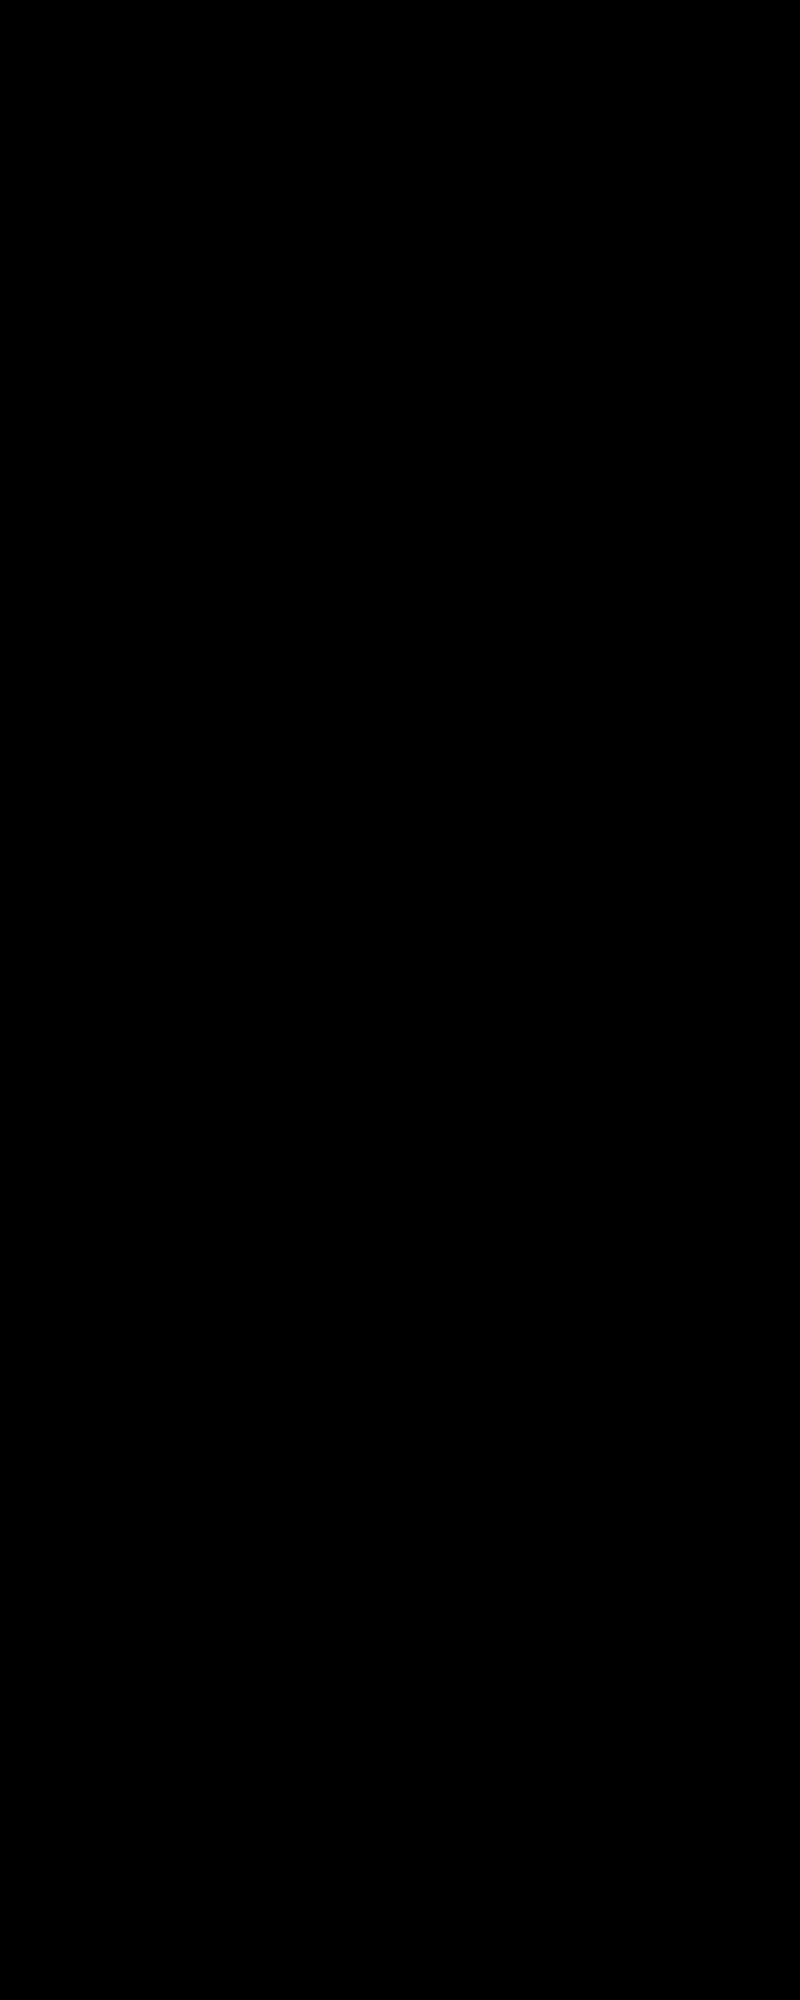 Stickman Figure Black Background.png PNG image